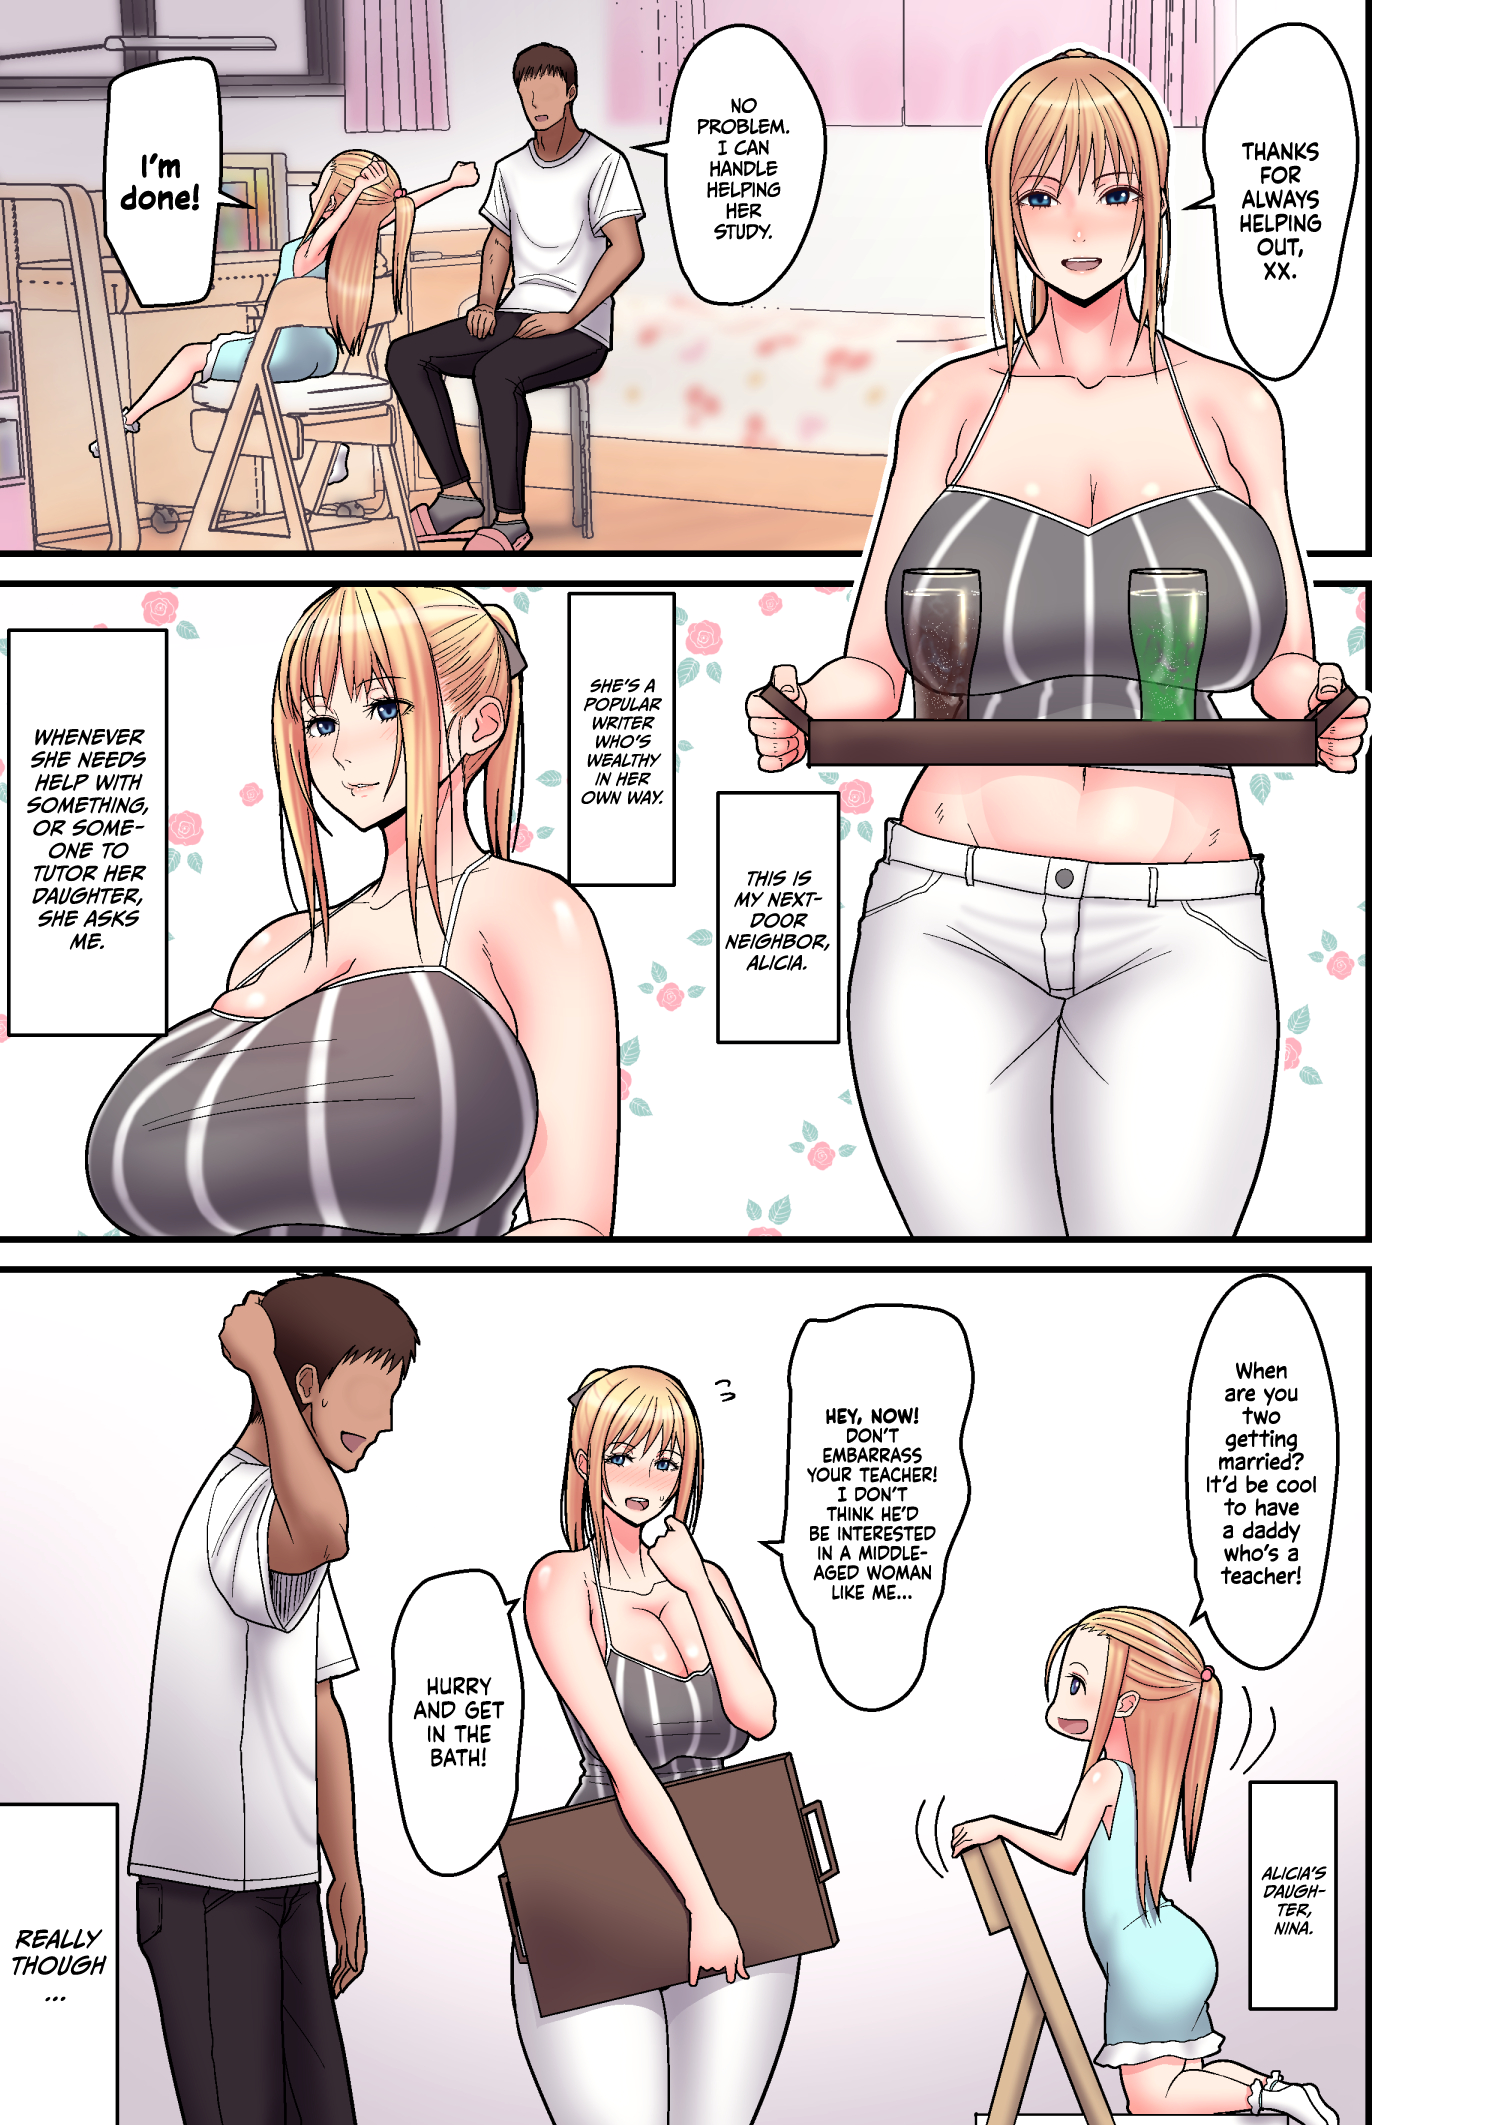 Cartoon Teacher Boobs - Busty blonde teacher uses her huge tits to give a boobjob in sex comics -  29 Pics | Hentai City